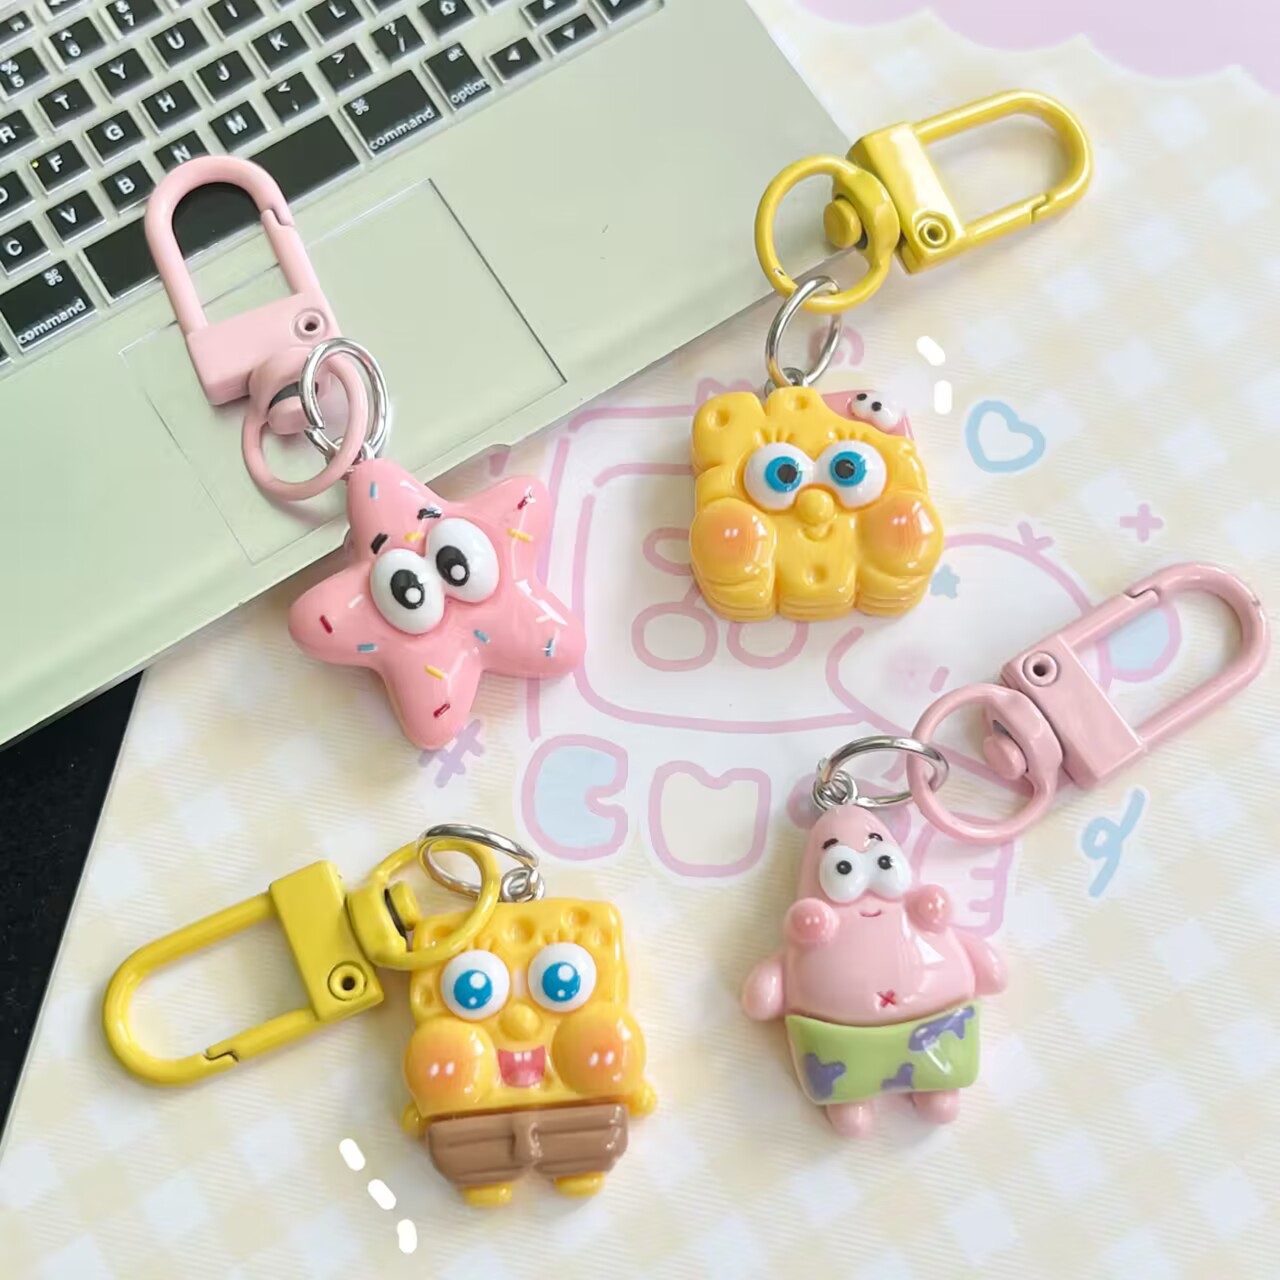 New% Sponge Baby Star Keychain Cute Cartoon Pendant Girl's Schoolbag Accessories Gift Girlfriends